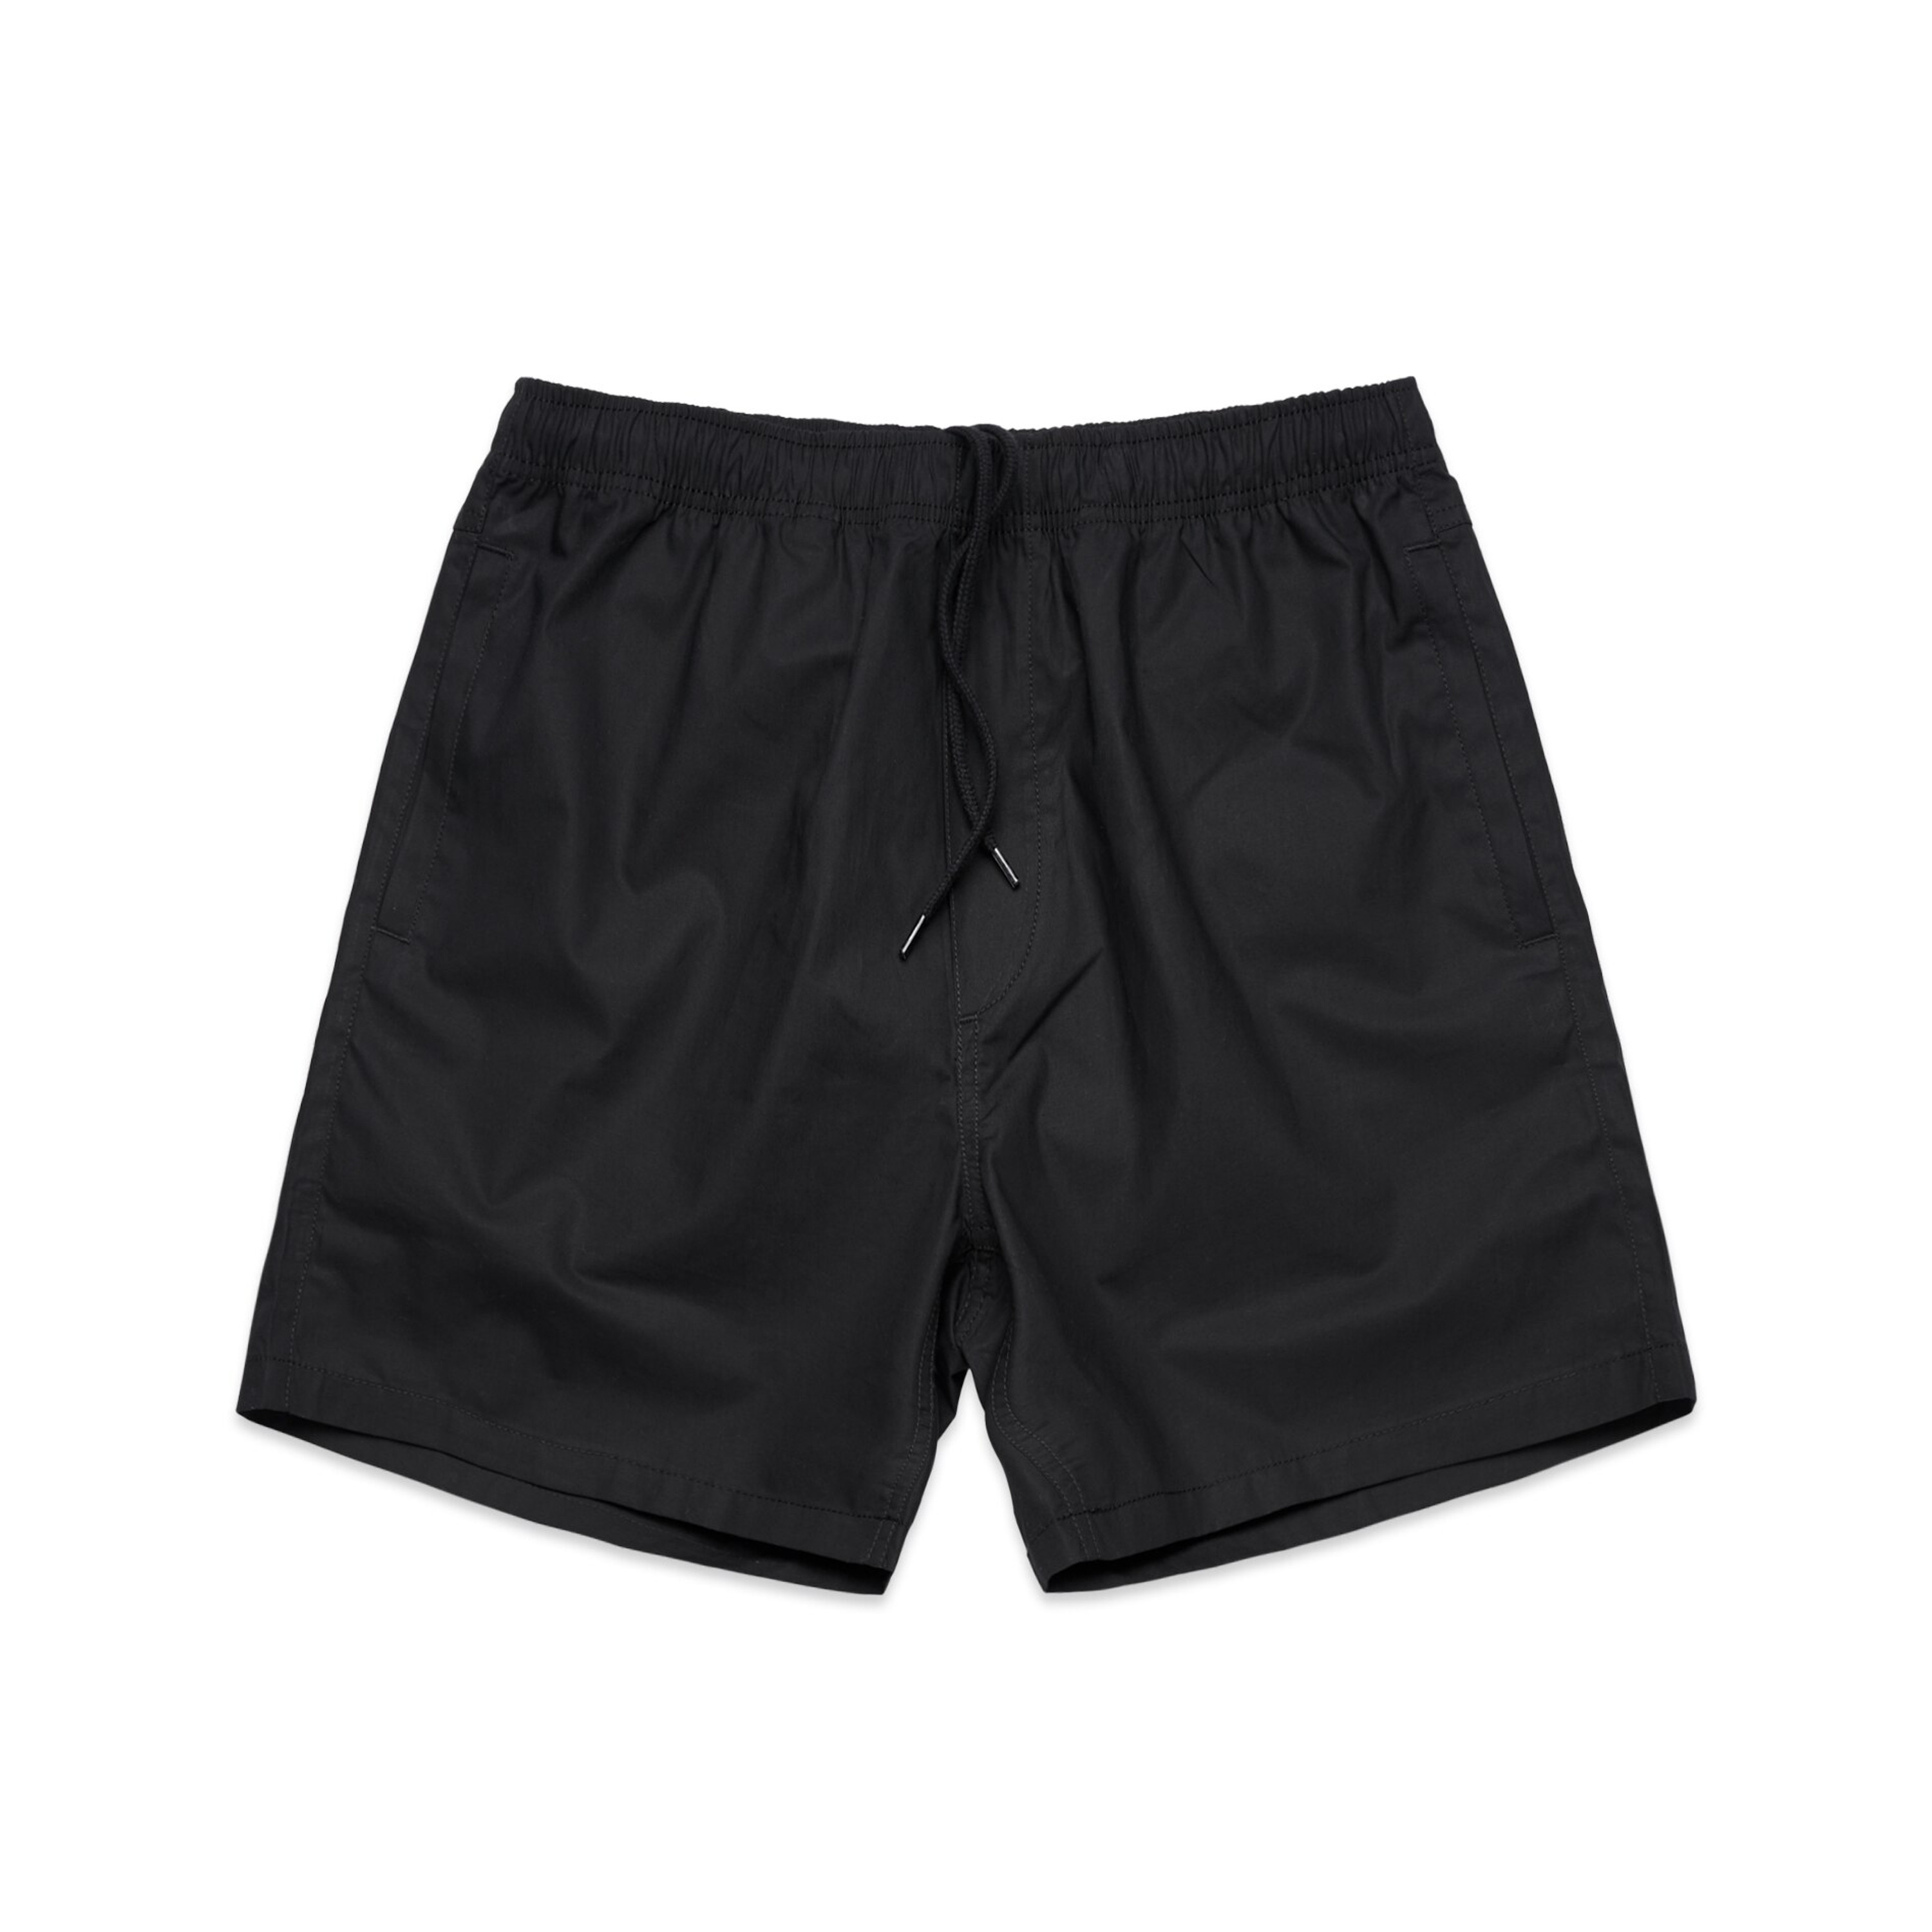 Trunks Beach Short Pants Male Clothes Beauty Swim Shorts Slim Men Fashion  Fit FW | eBay